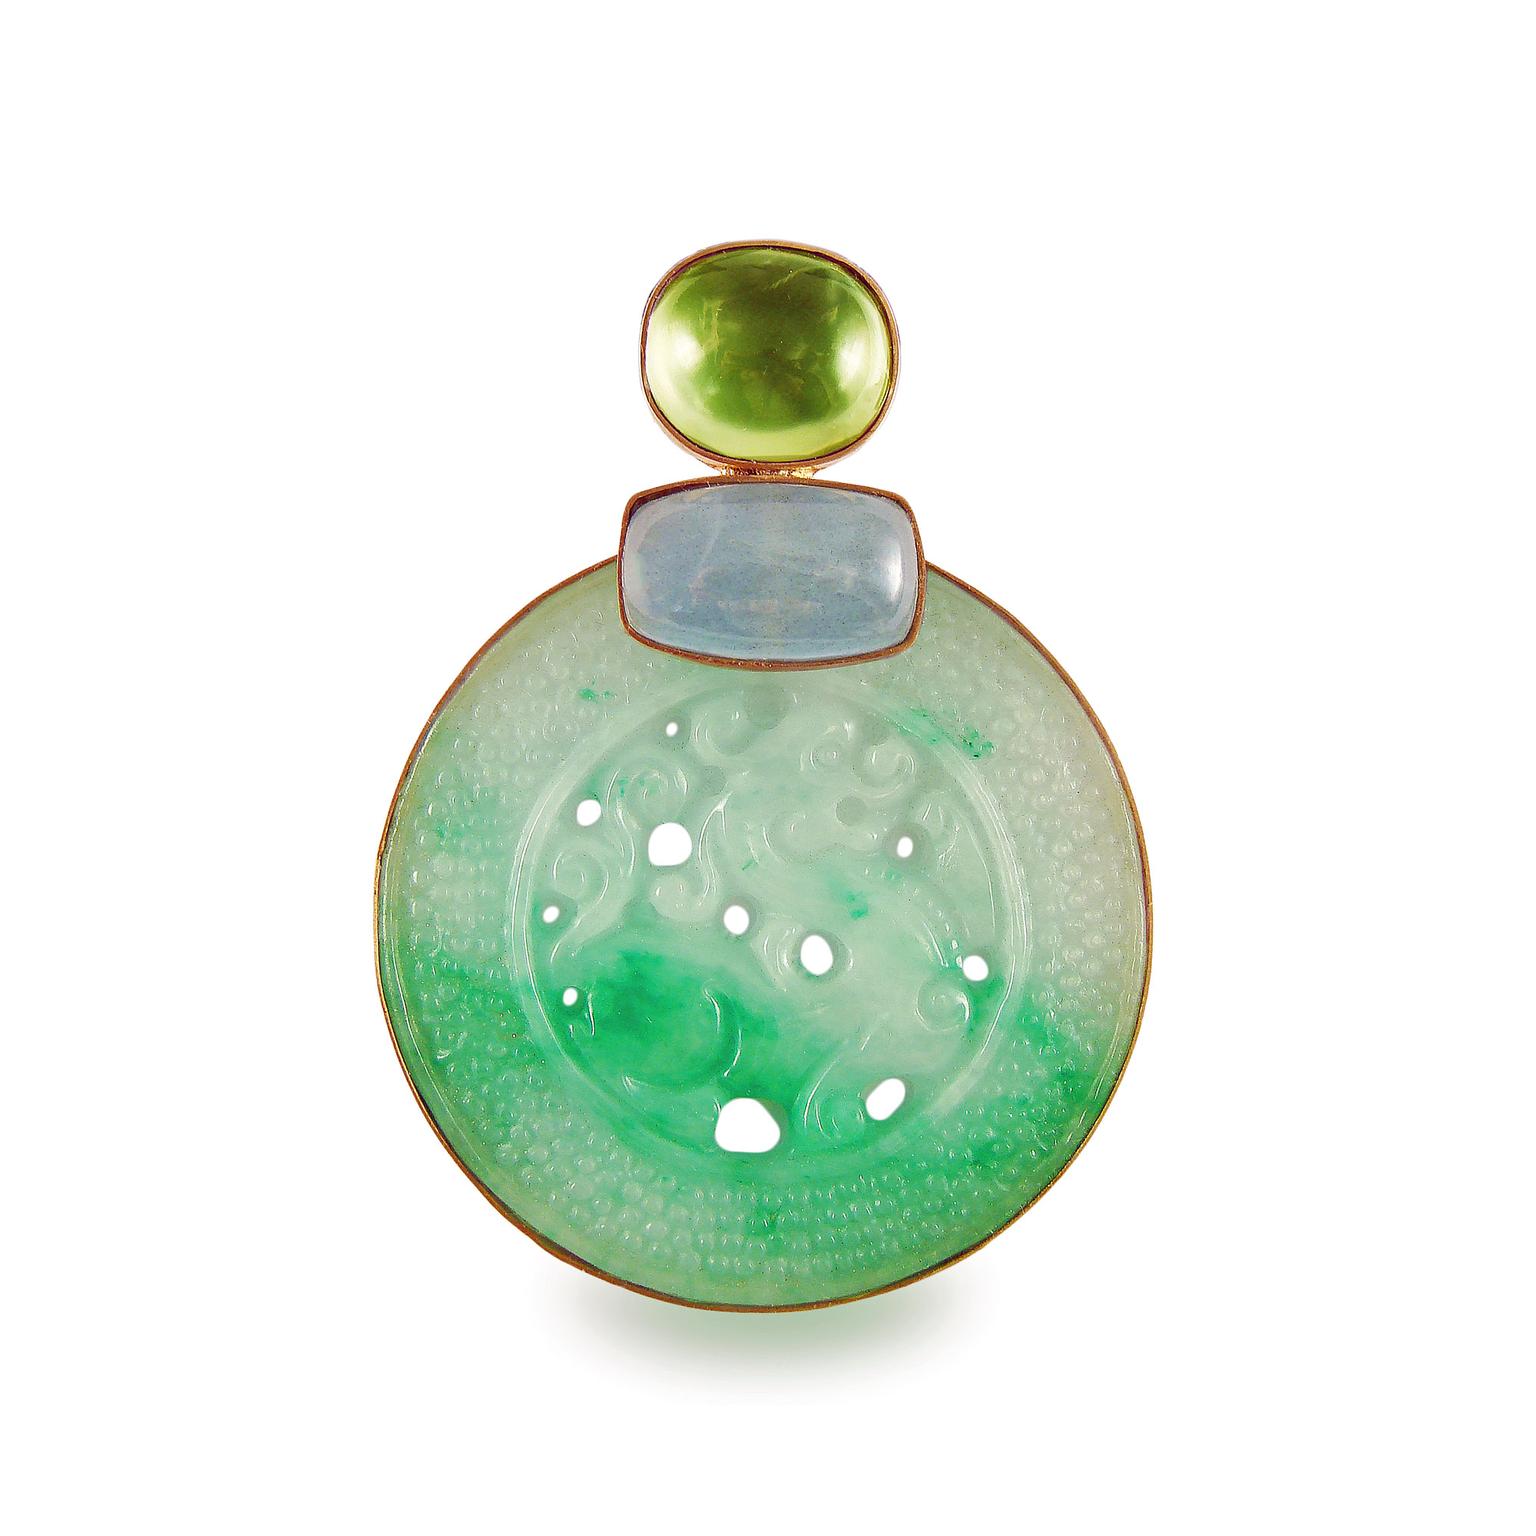 Corrado Giuspino hand-carved jade pendant with milky aquamarine and prehnite